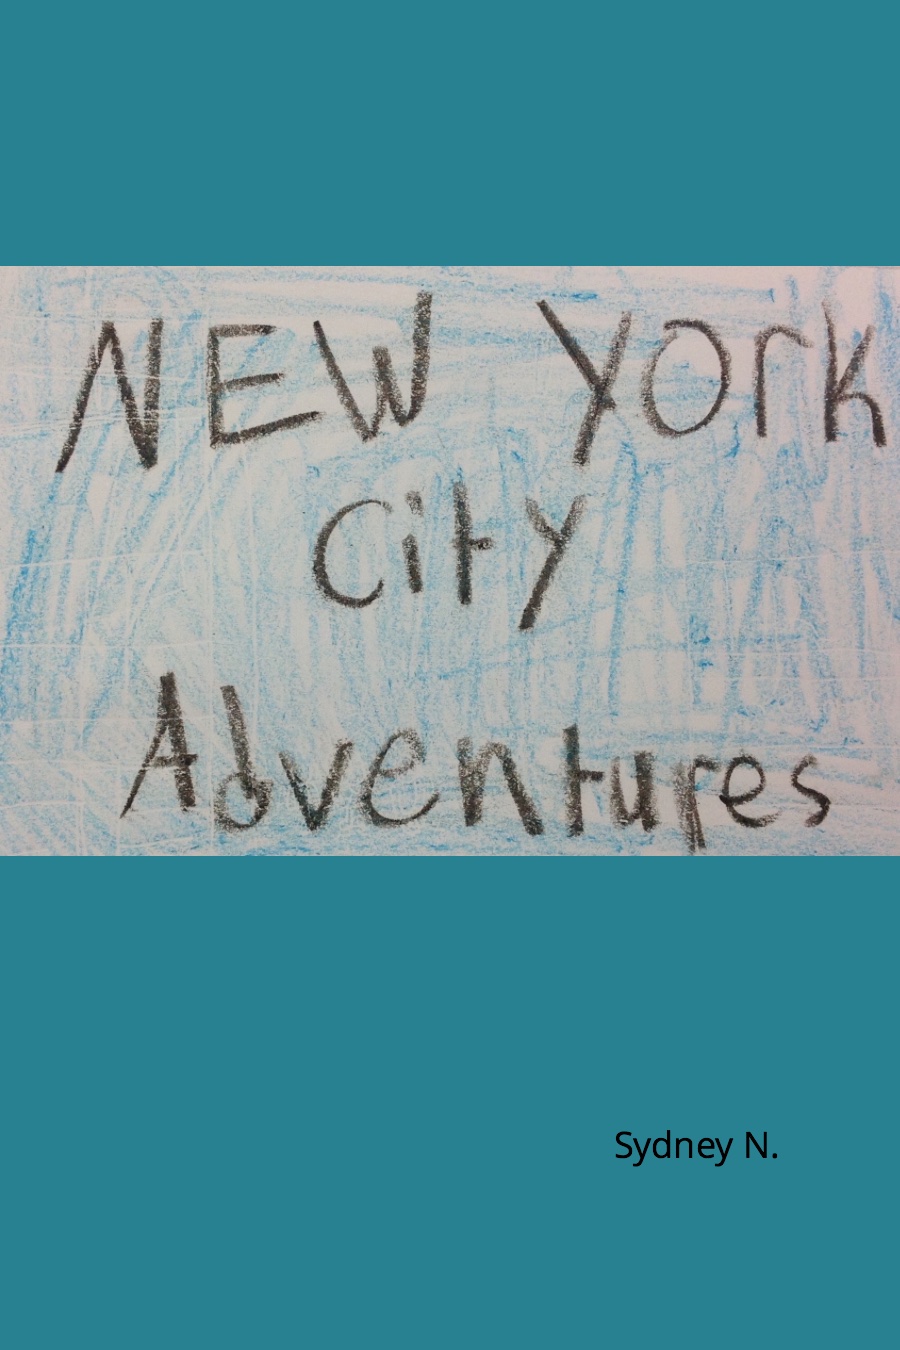 A New York City Adventure by Sydney N